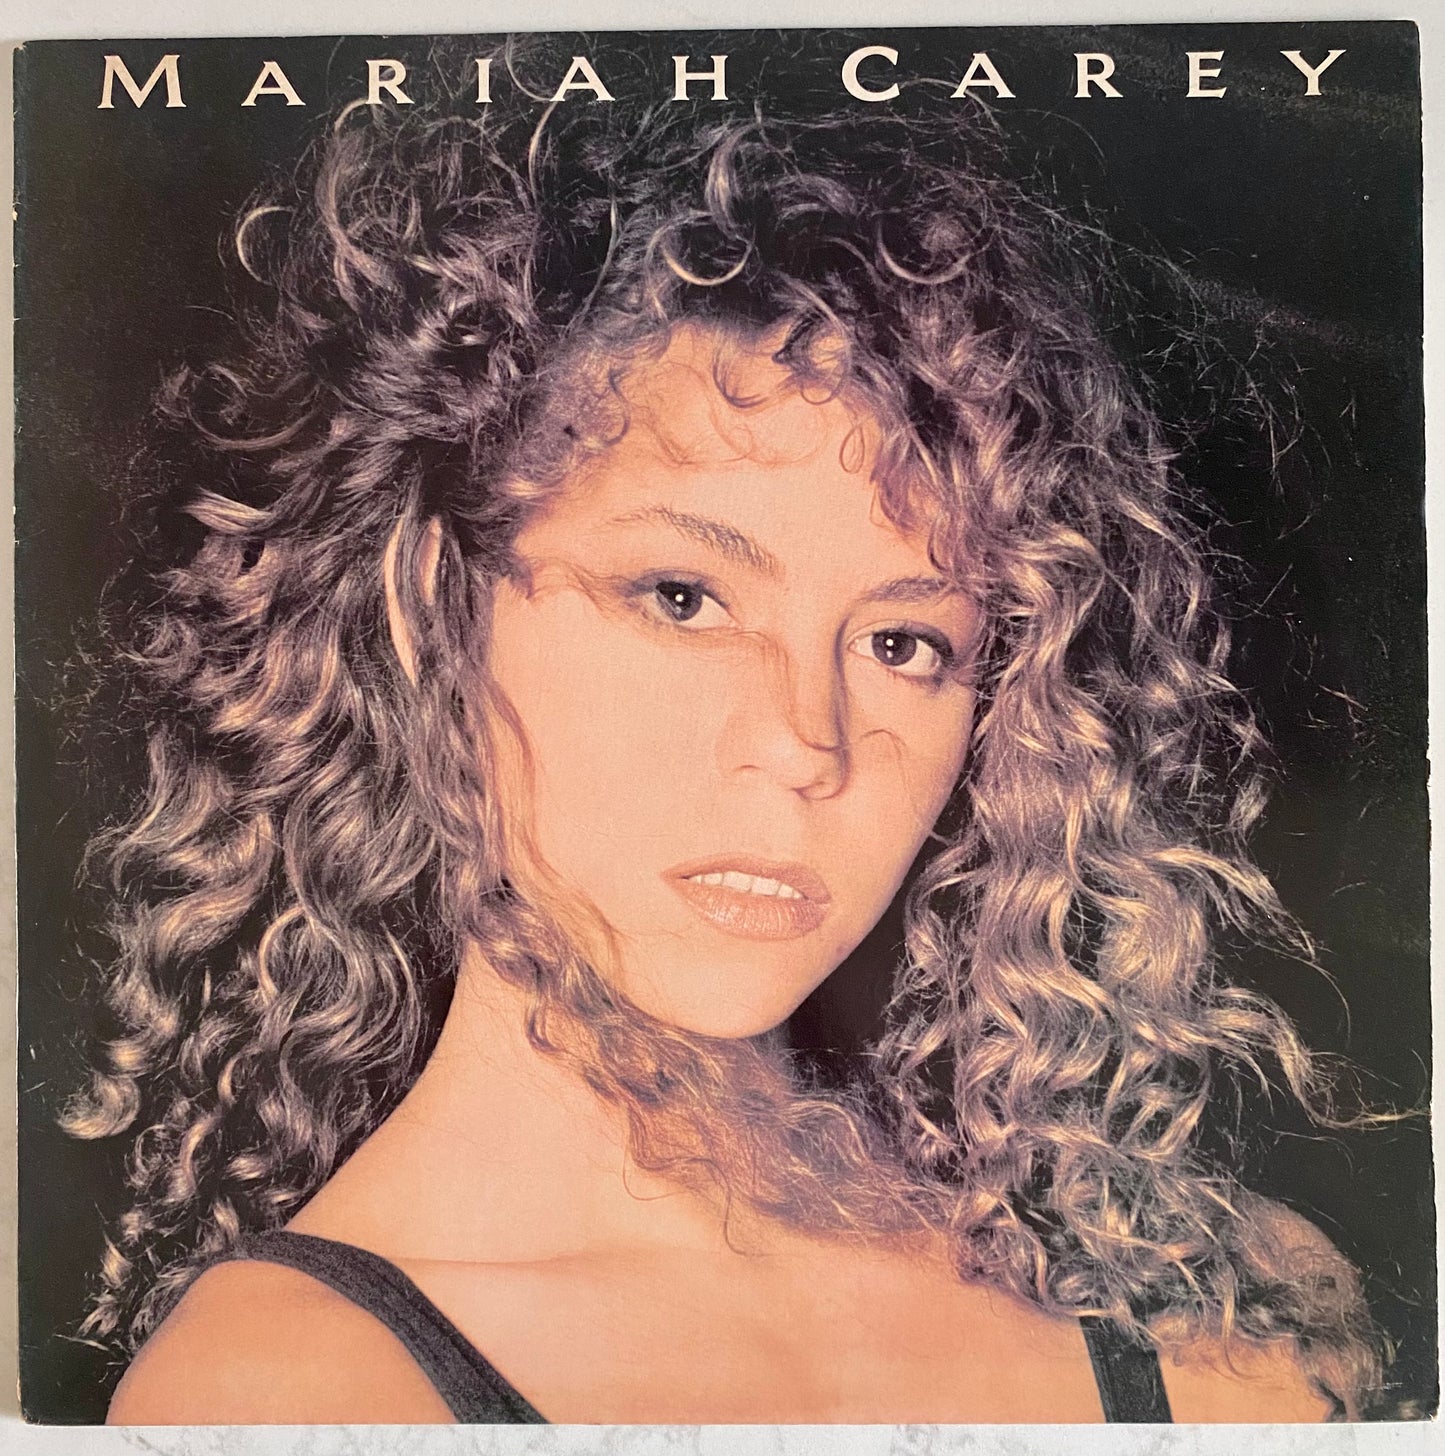 Mariah Carey - Mariah Carey (LP, Album, Car). R&B